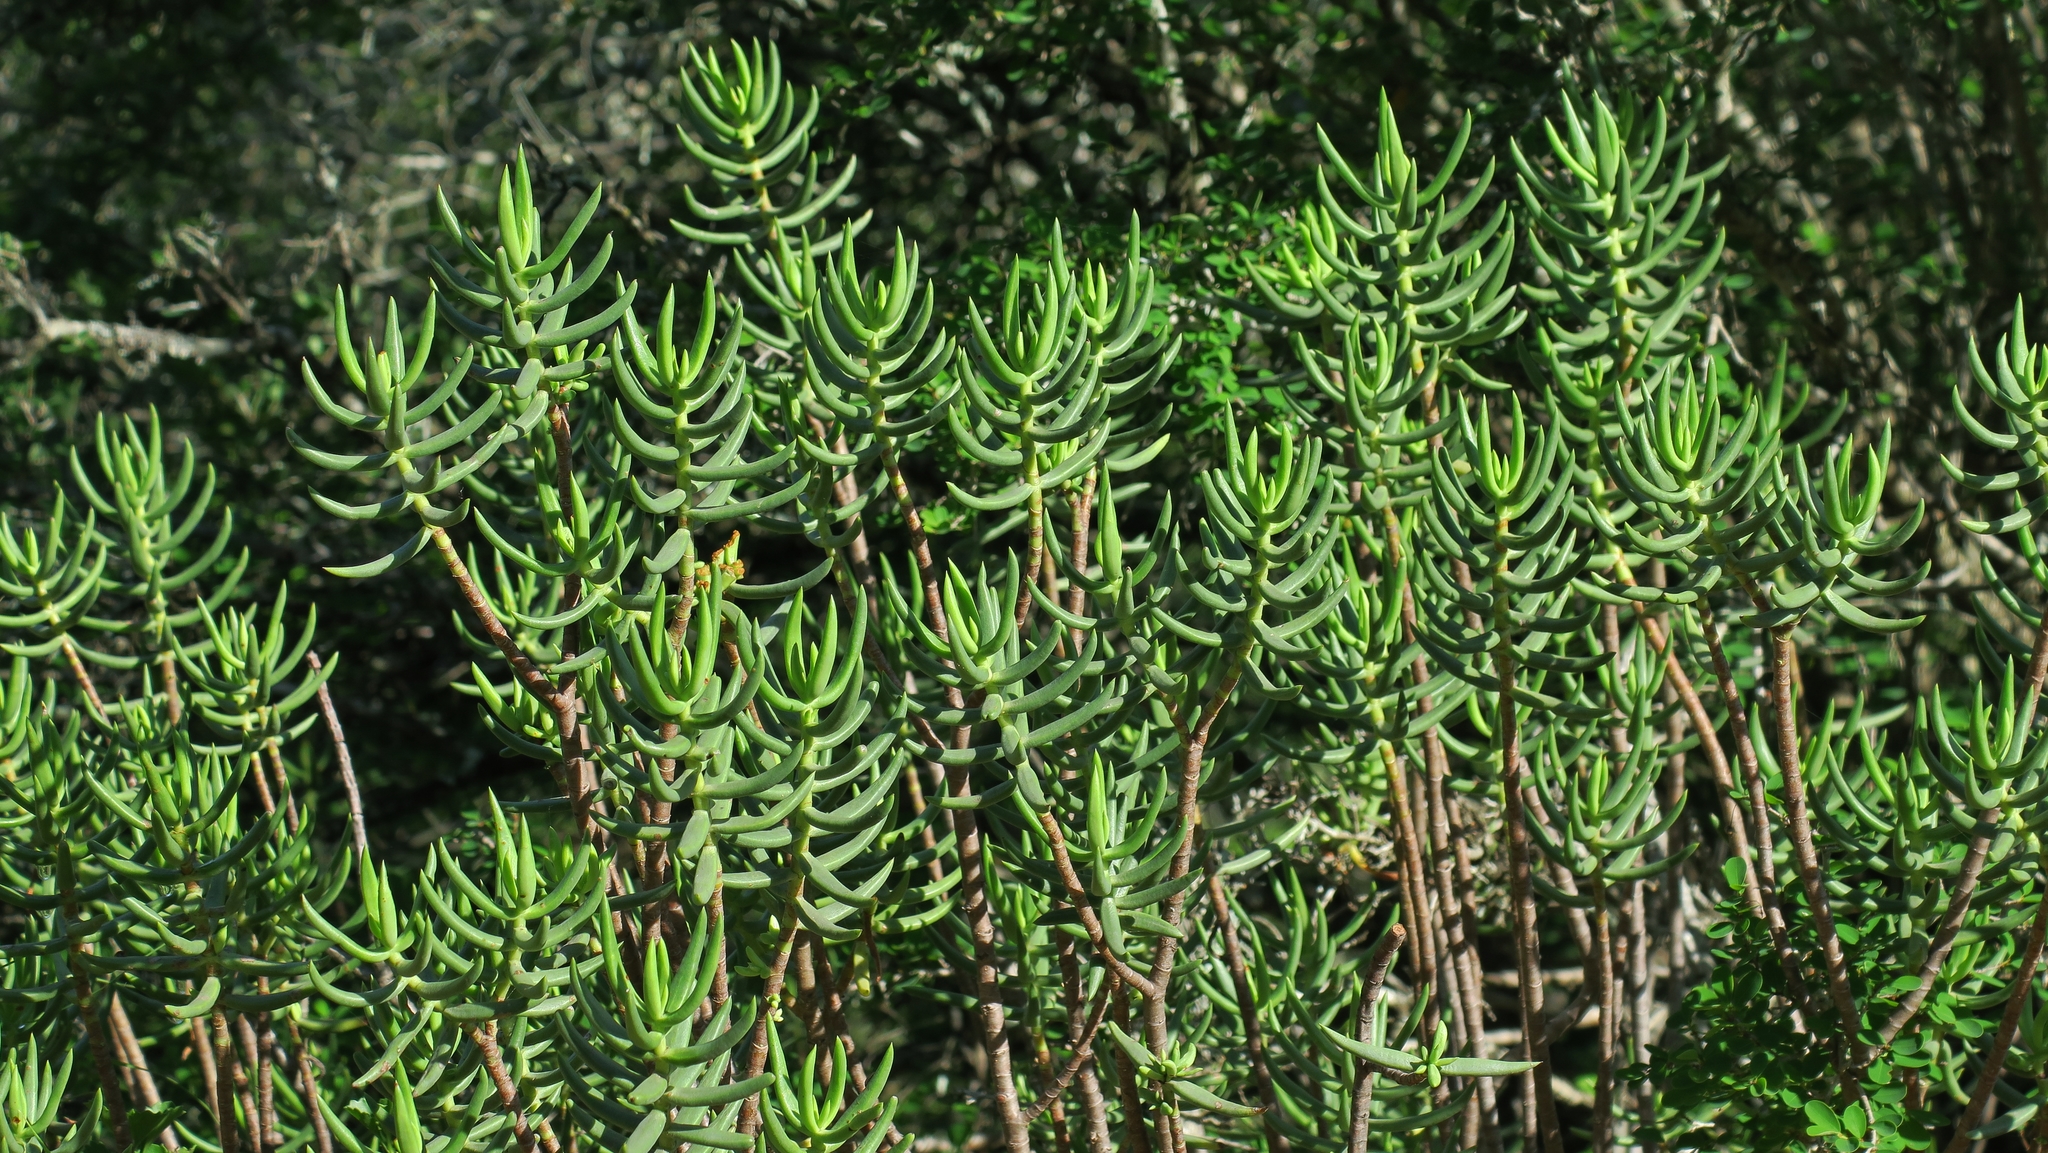 Crassula tetragona - Miniature Pine Tree